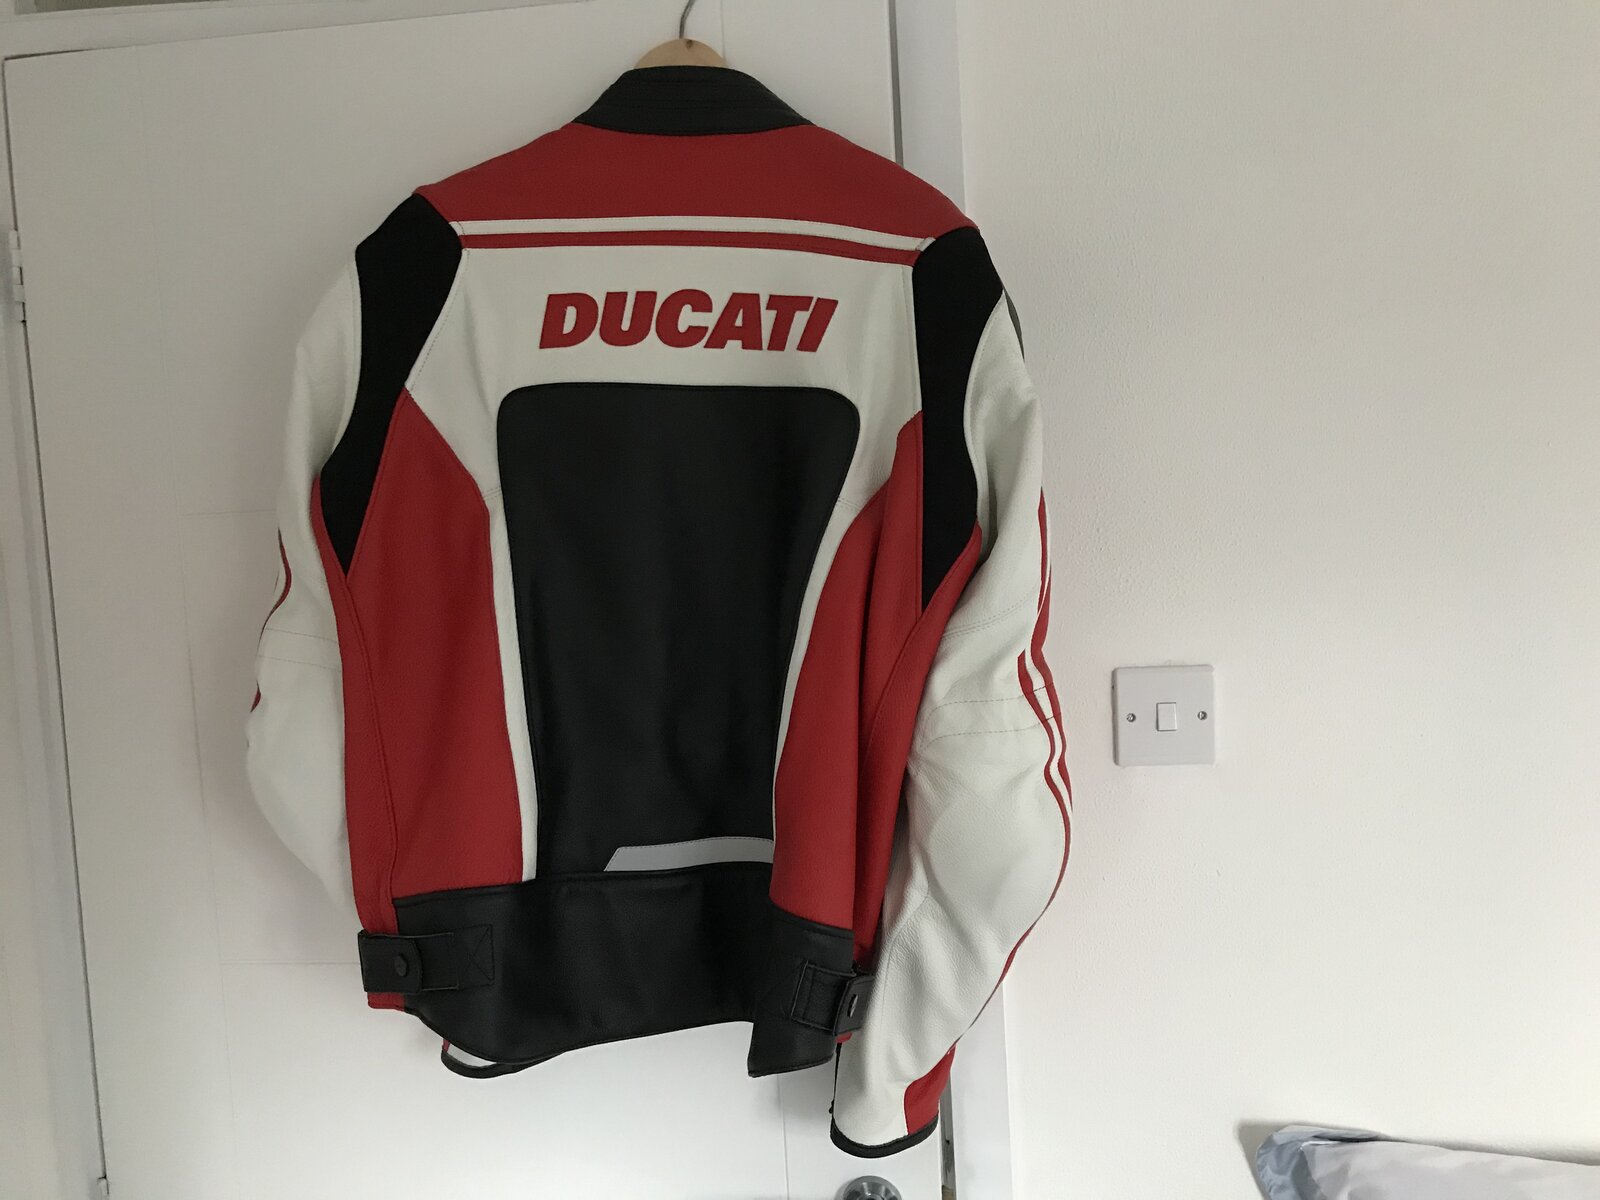 For Sale - Dainese Ducati Leather Jacket | Ducati Forum